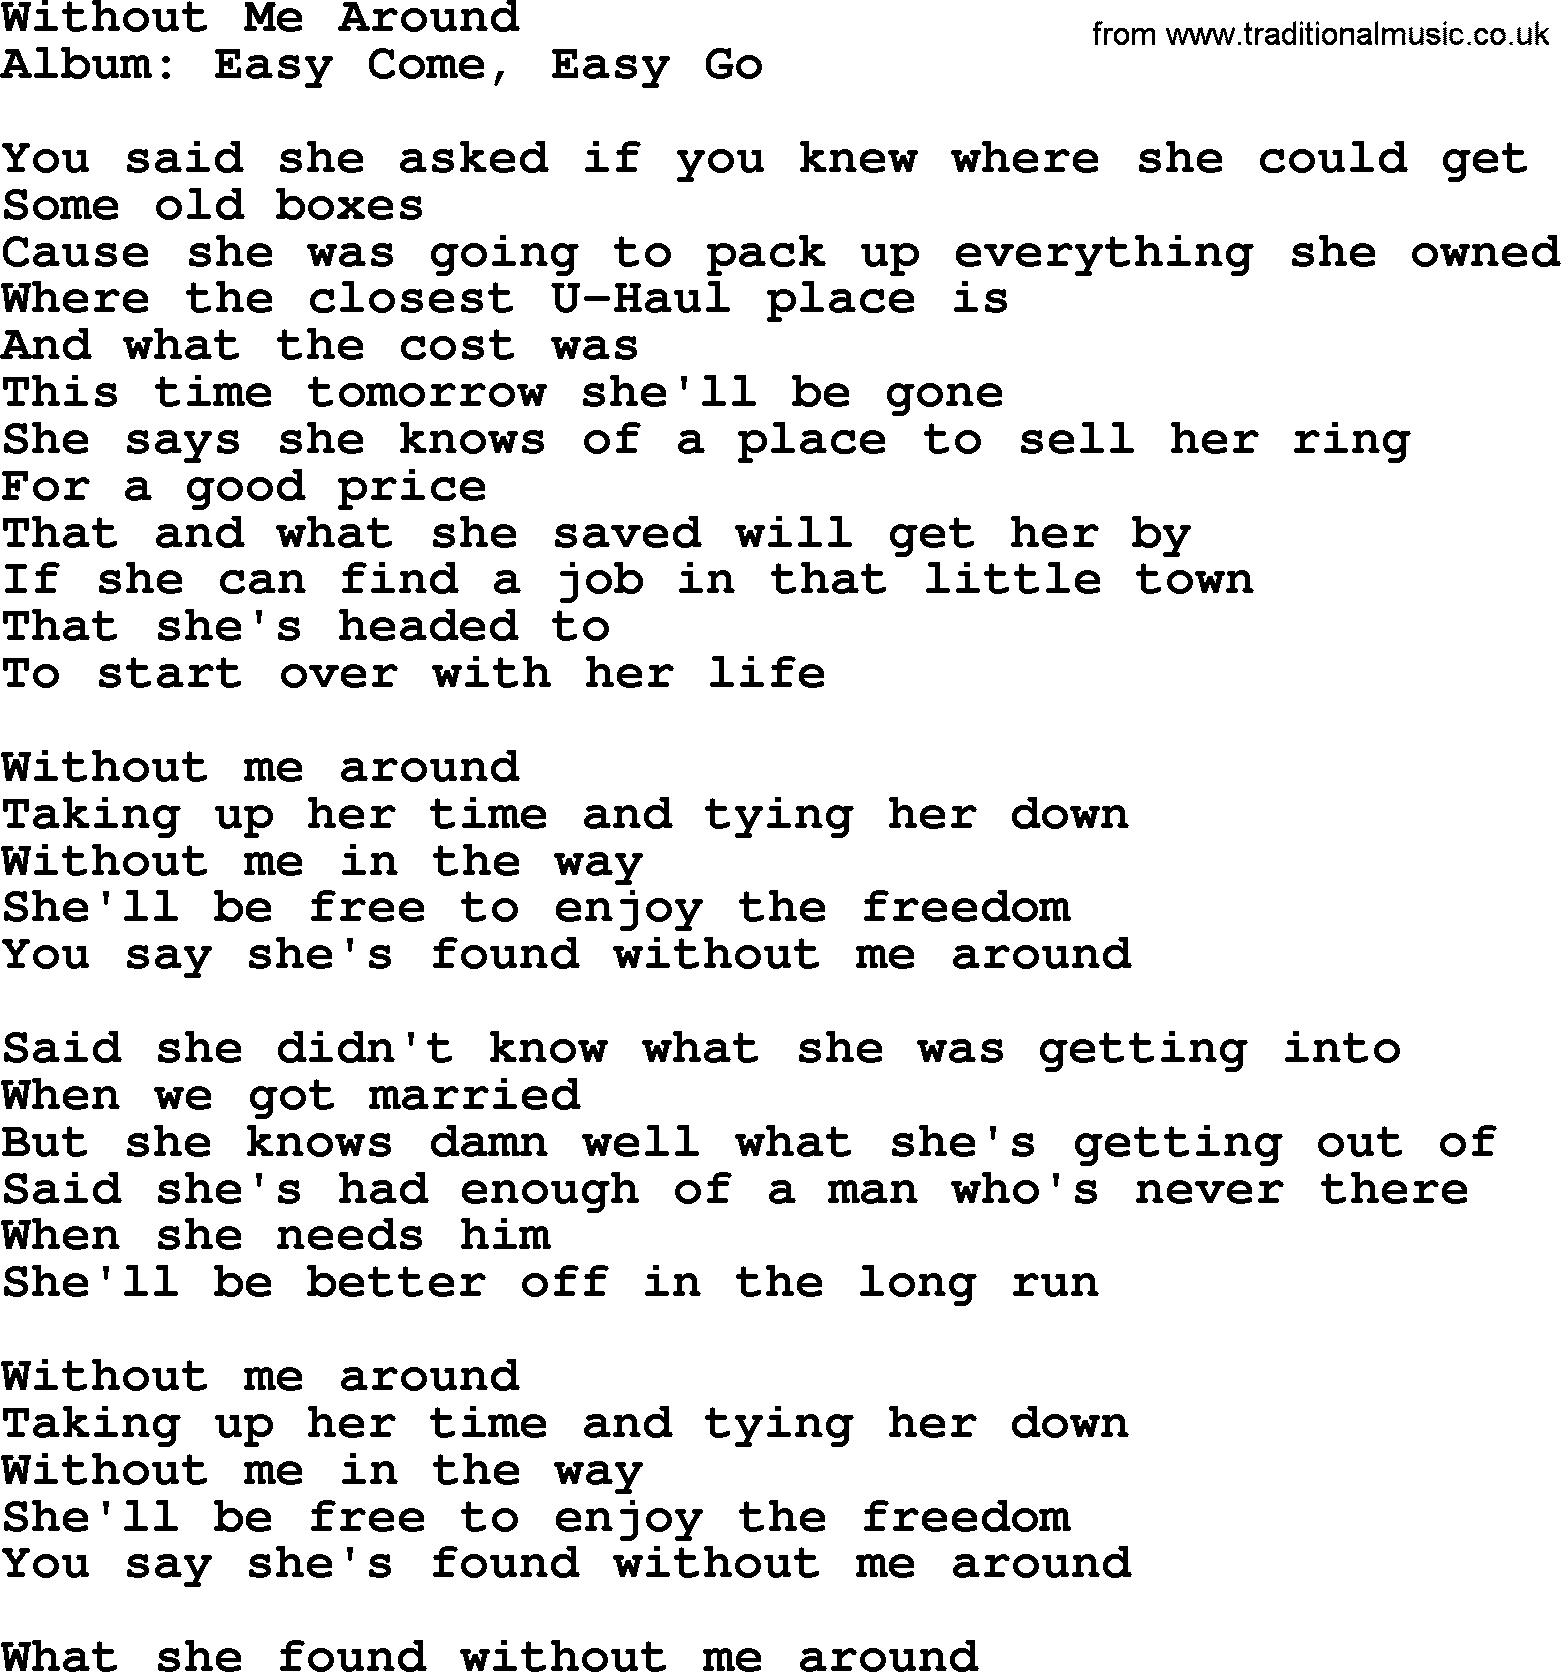 George Strait song: Without Me Around, lyrics